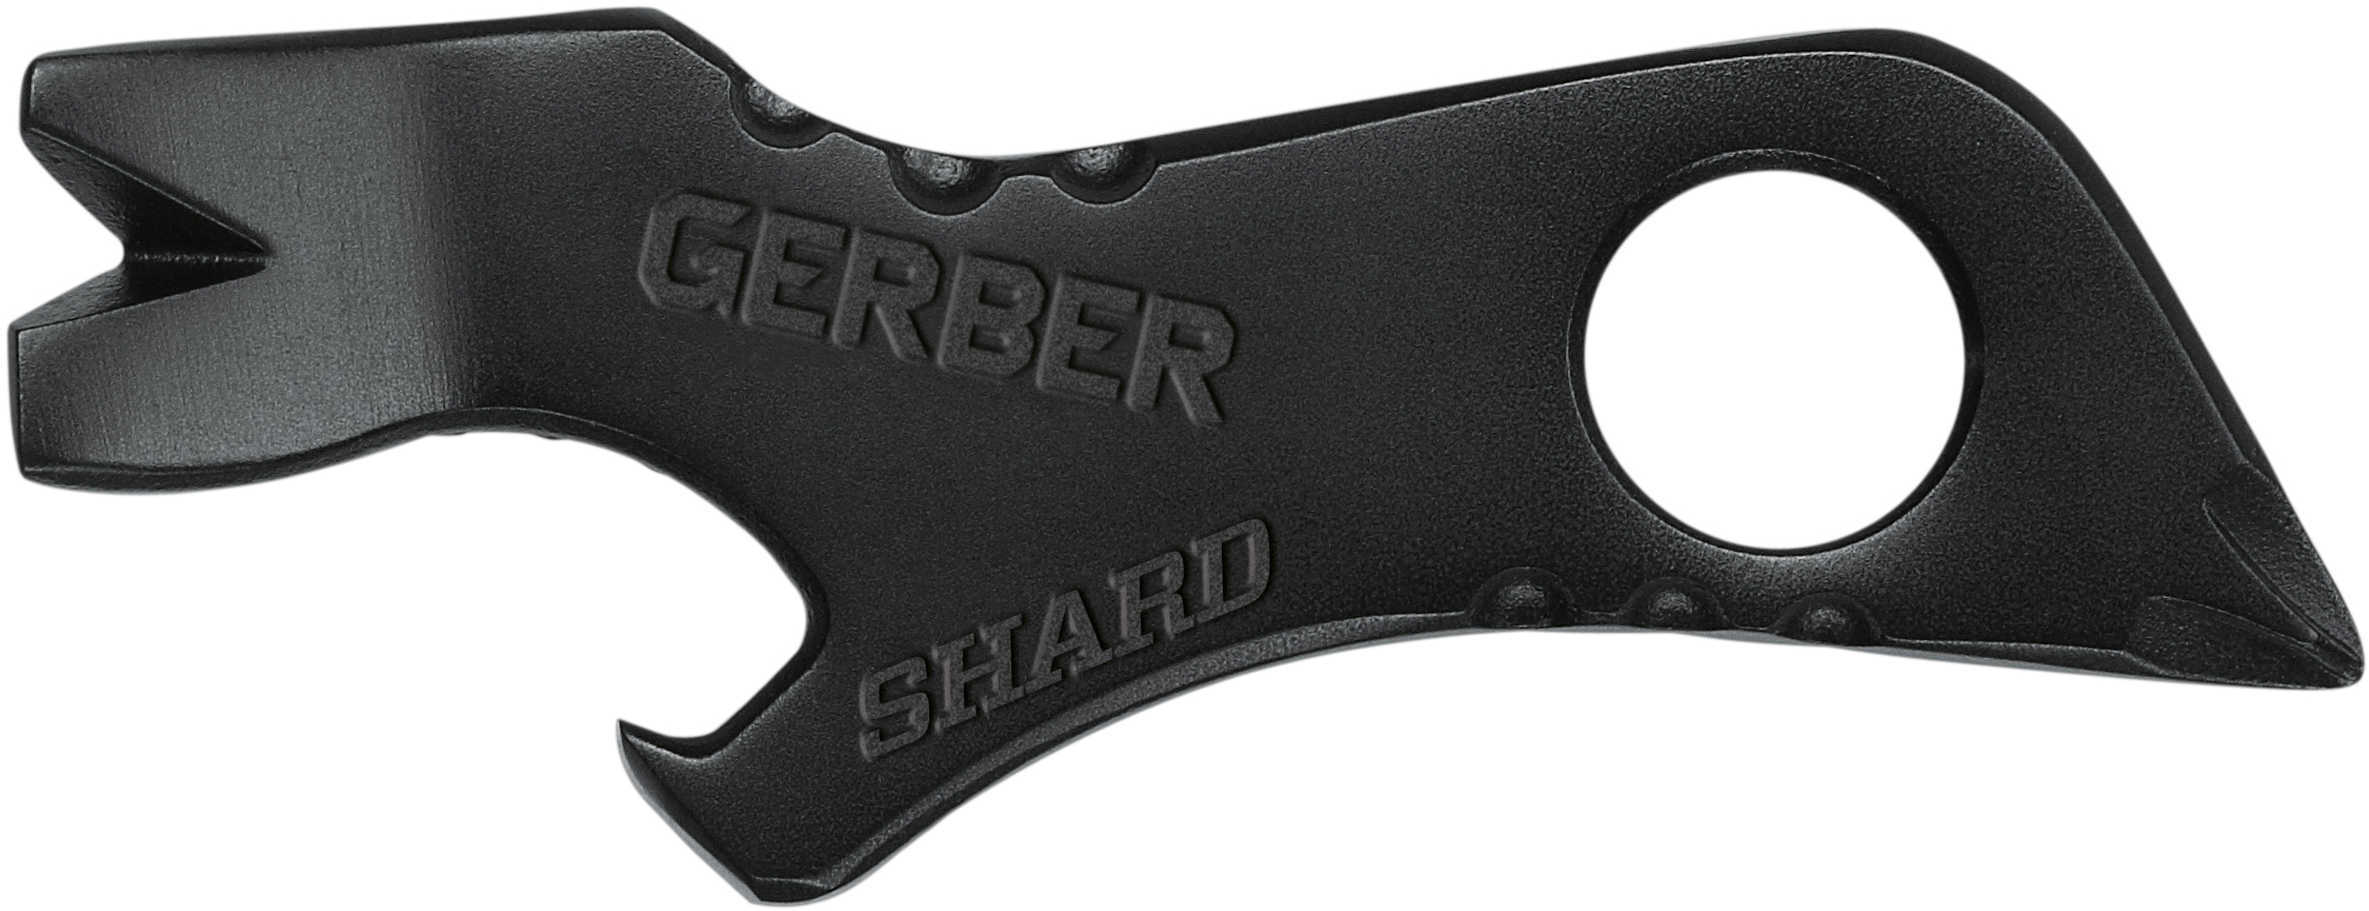 Gerber Blades Shard Keychain Tool- Box 22-01769